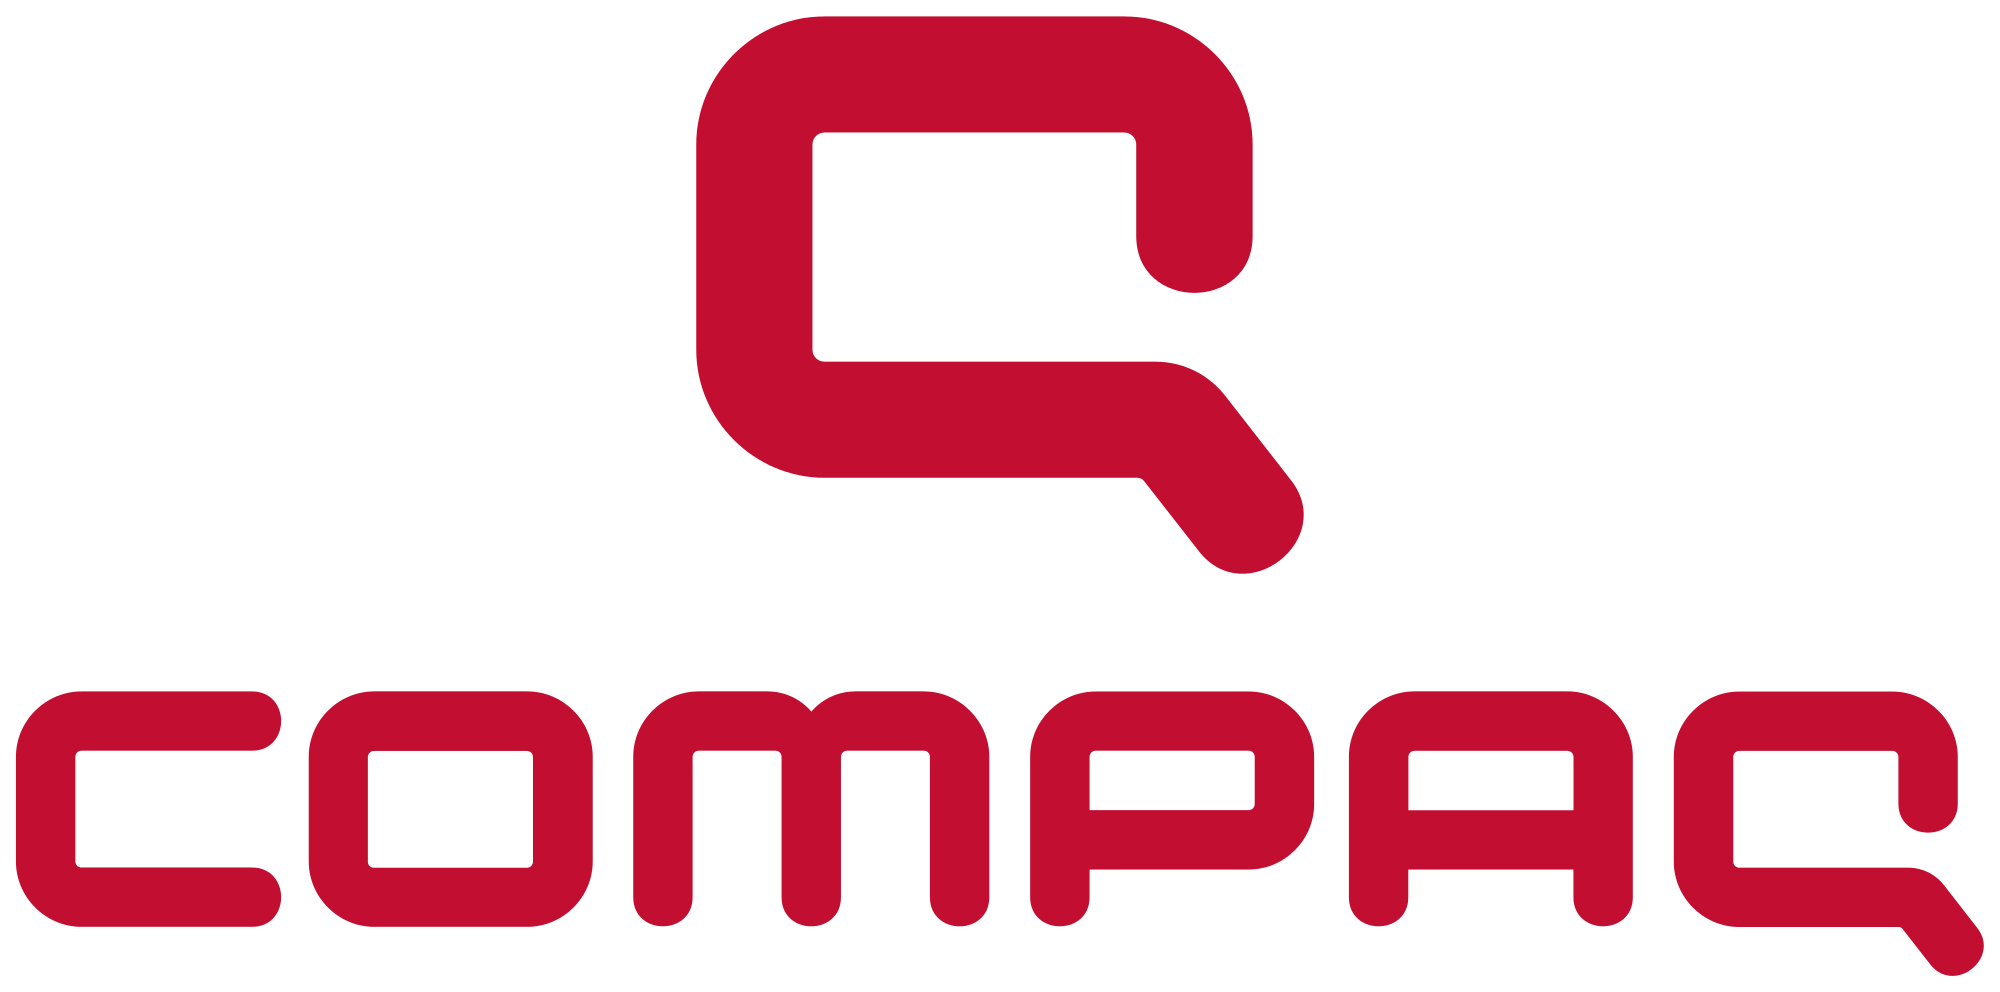 New Compaq Logo - File:Compaq logo new.svg - Wikimedia Commons